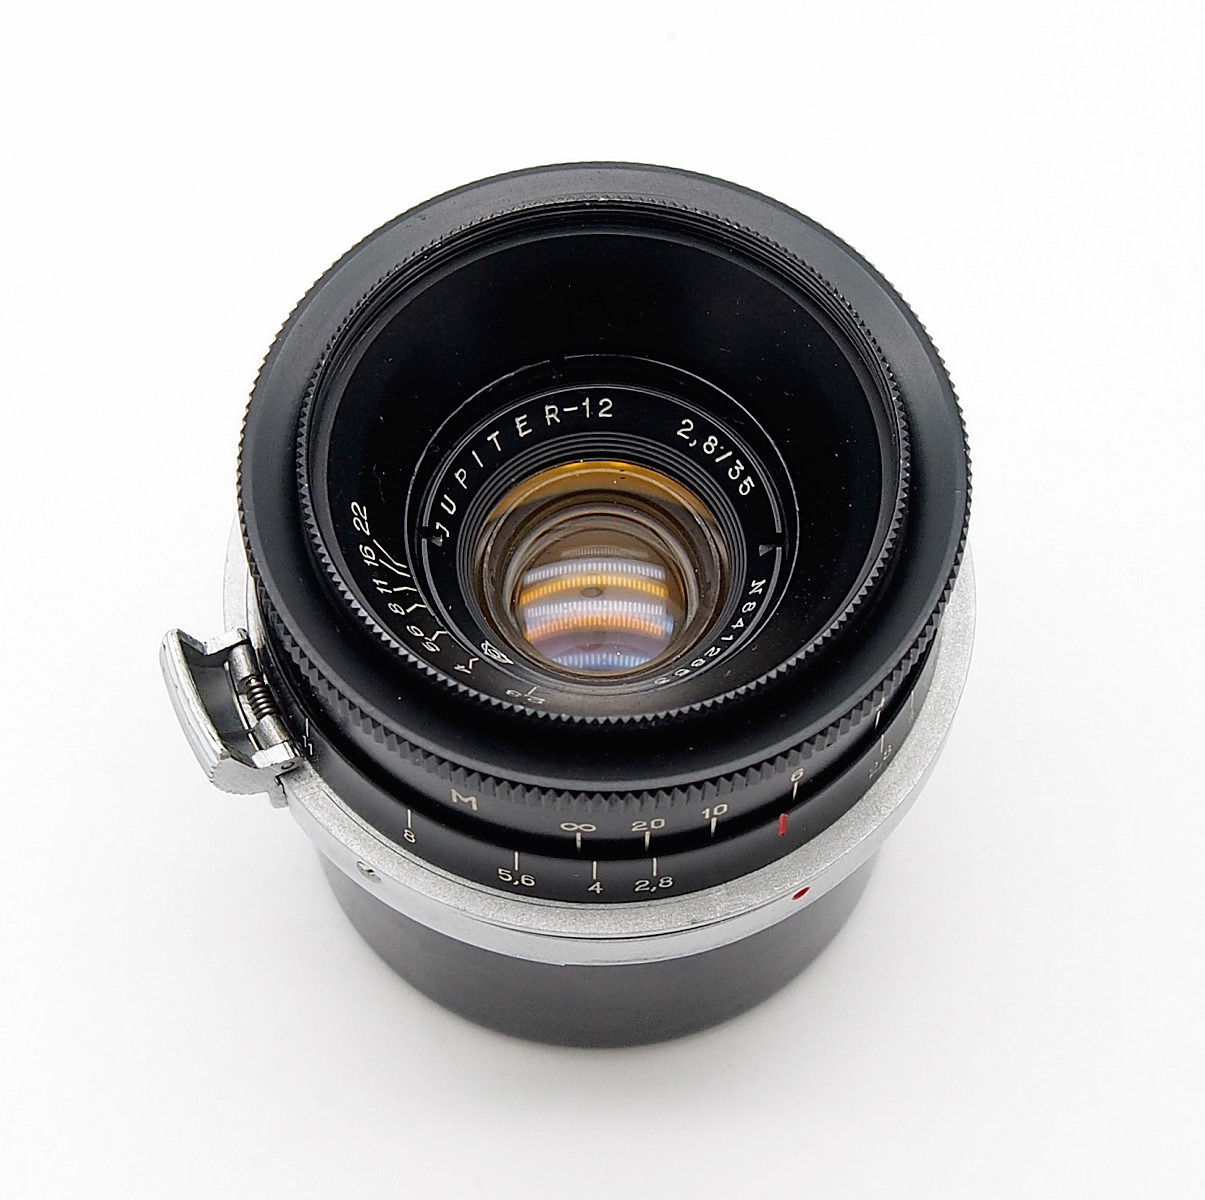 Jupiter-12 35mm F2.8 (Biogon) Lens in Contax/Kiev Mount #8664